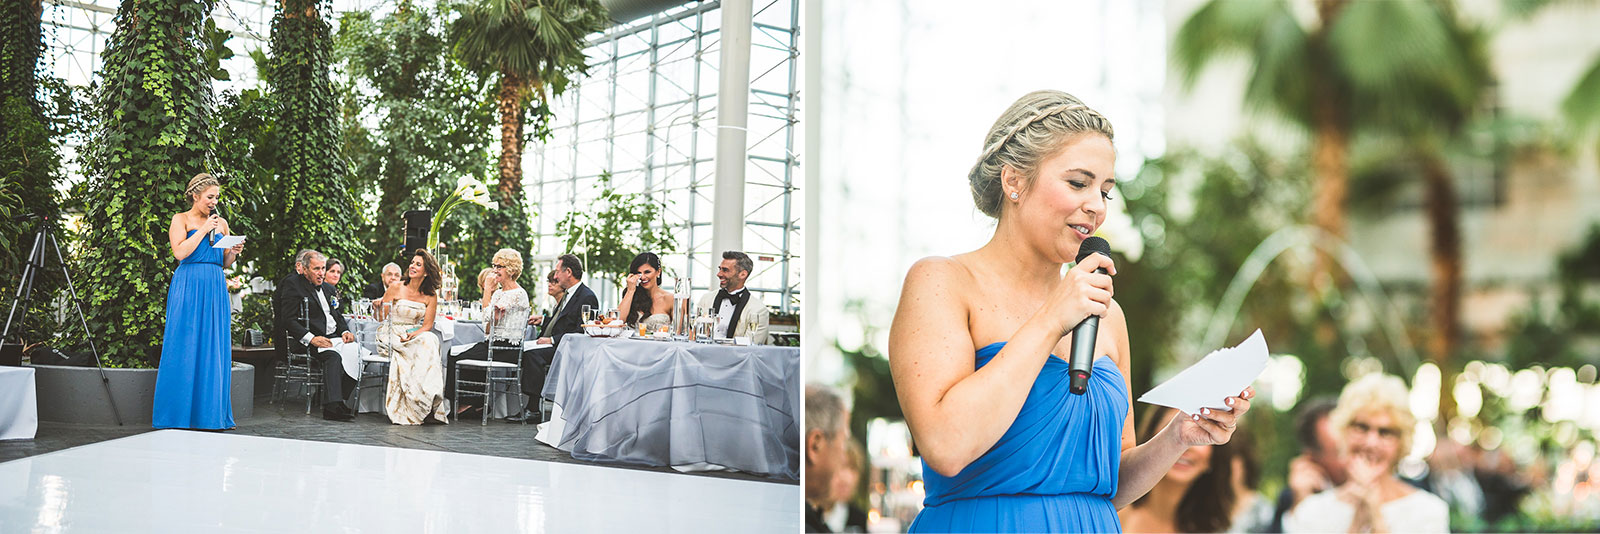 97 maid of honor speech - Marisa + Chris // Chicago Wedding Photos at Navy Pier Crystal Garden